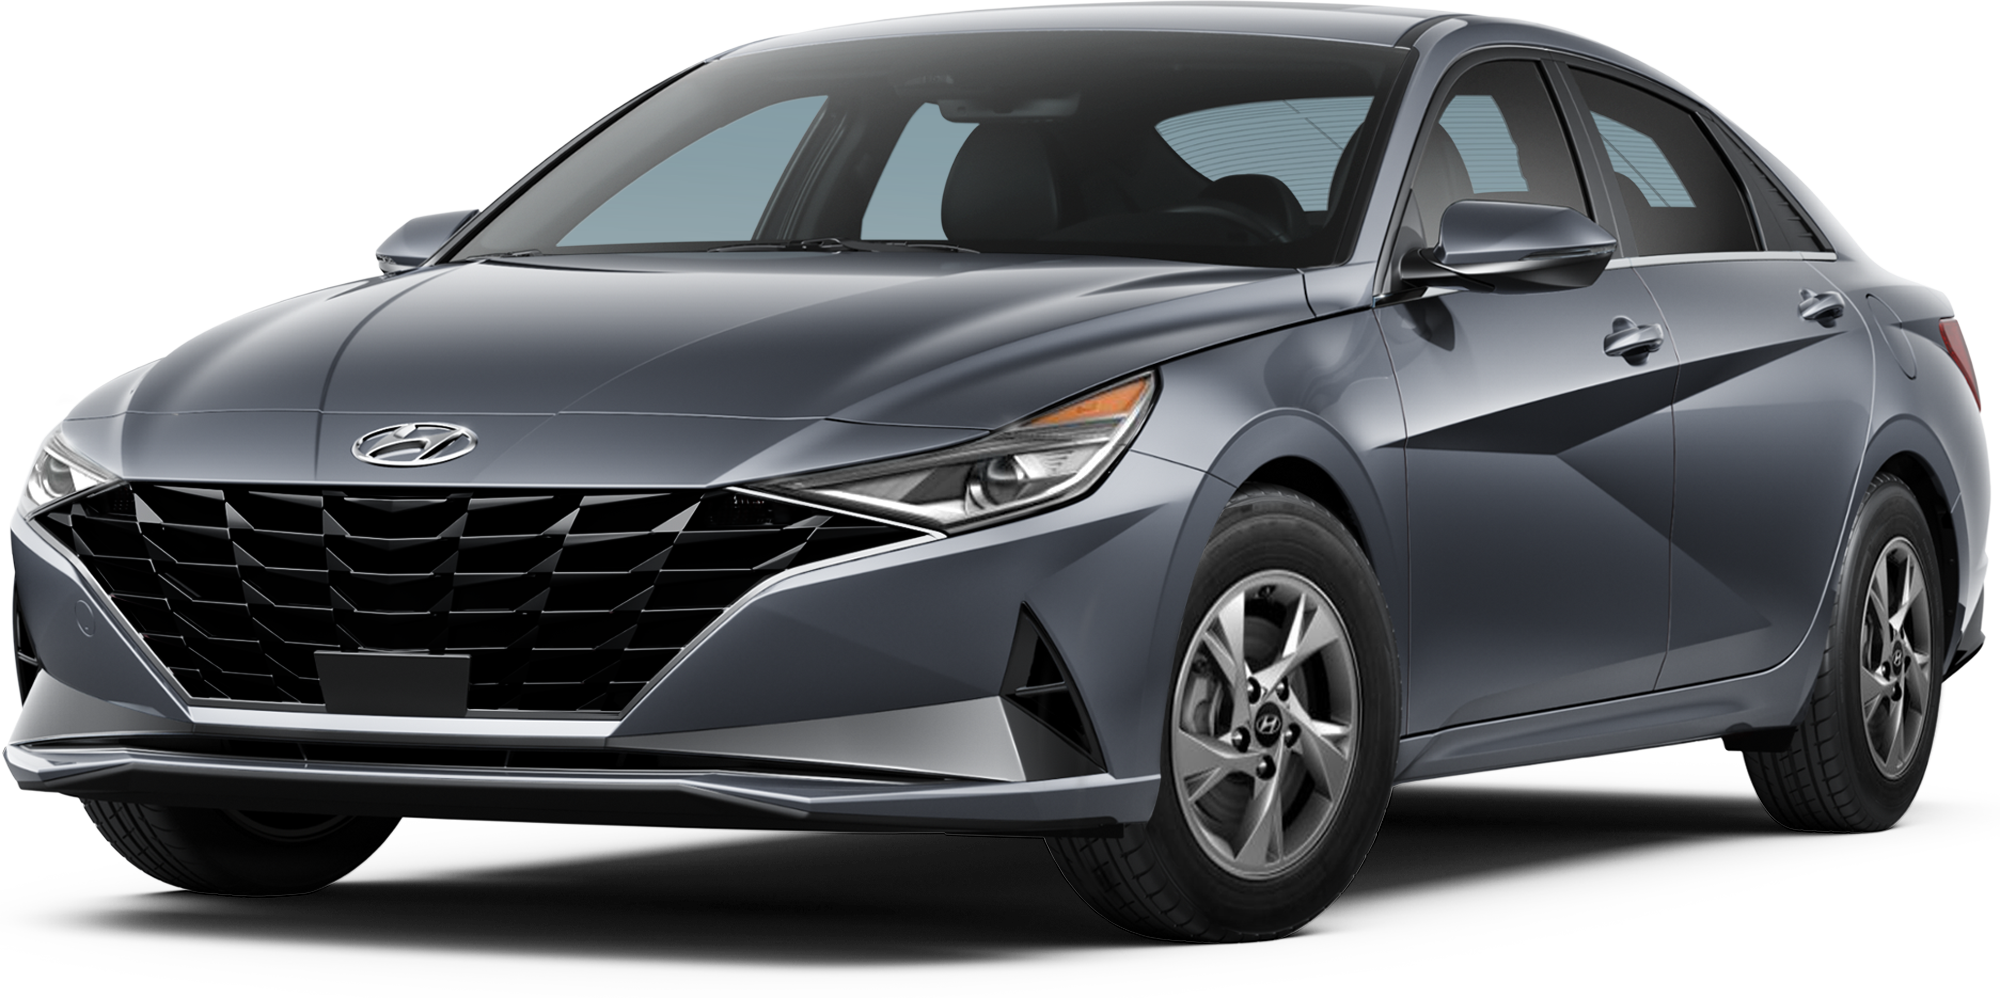 2021 Hyundai Elantra Incentives, Specials & Offers in Escondido CA